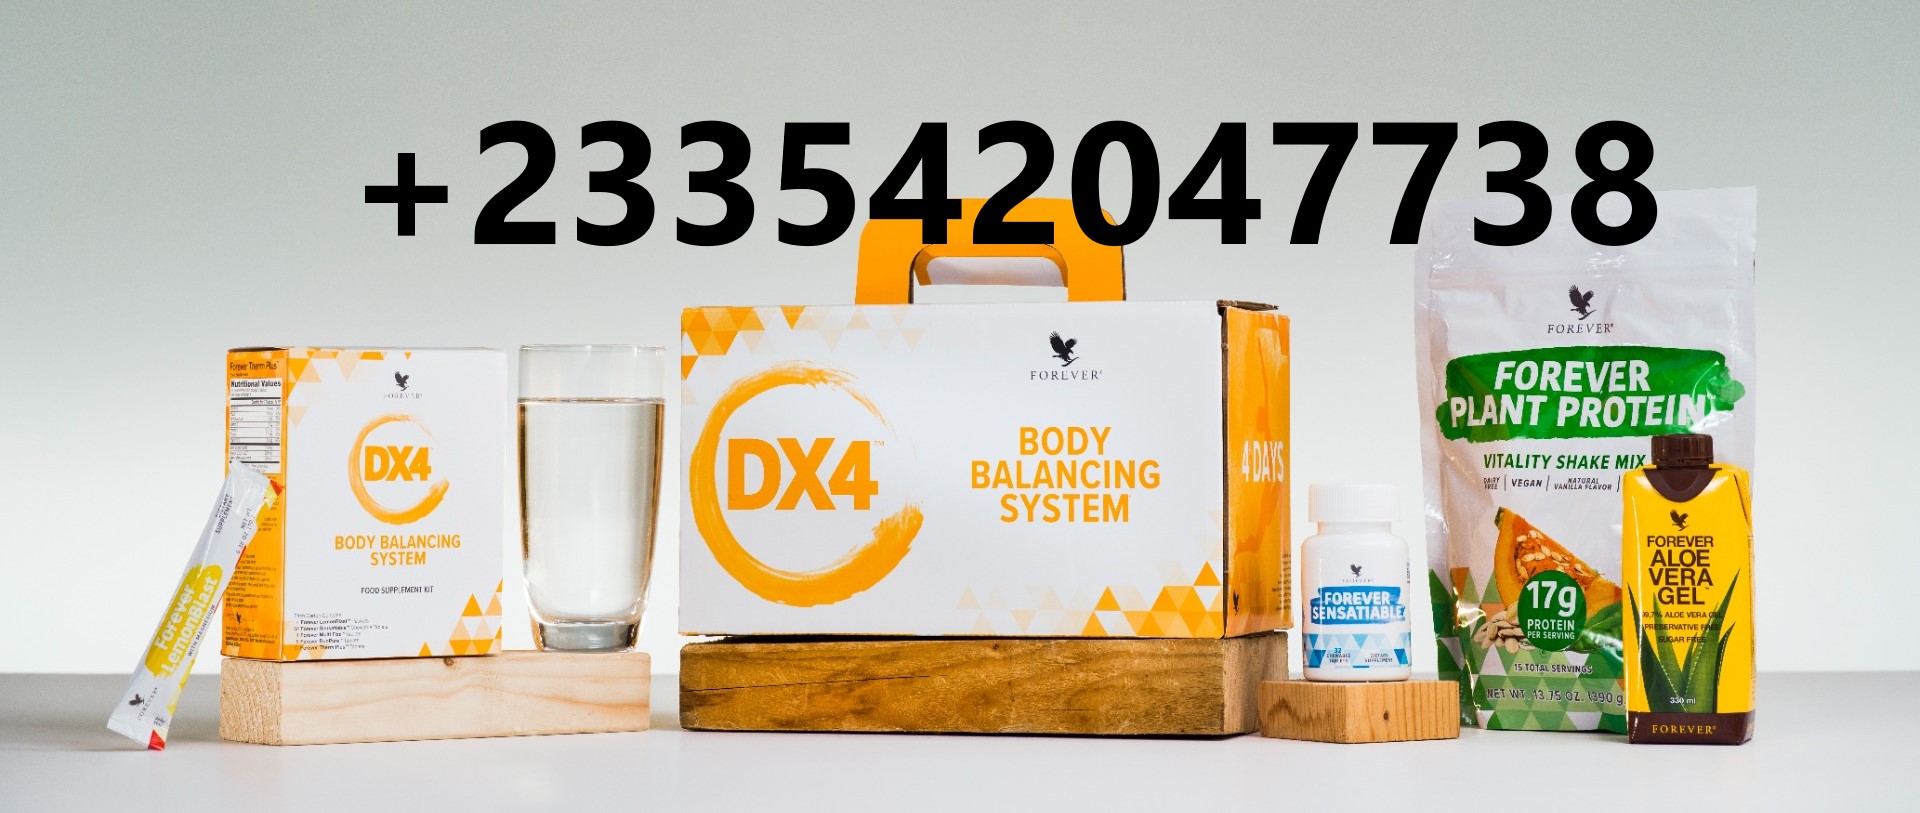 DX4 Body Balancing System Health Benefits